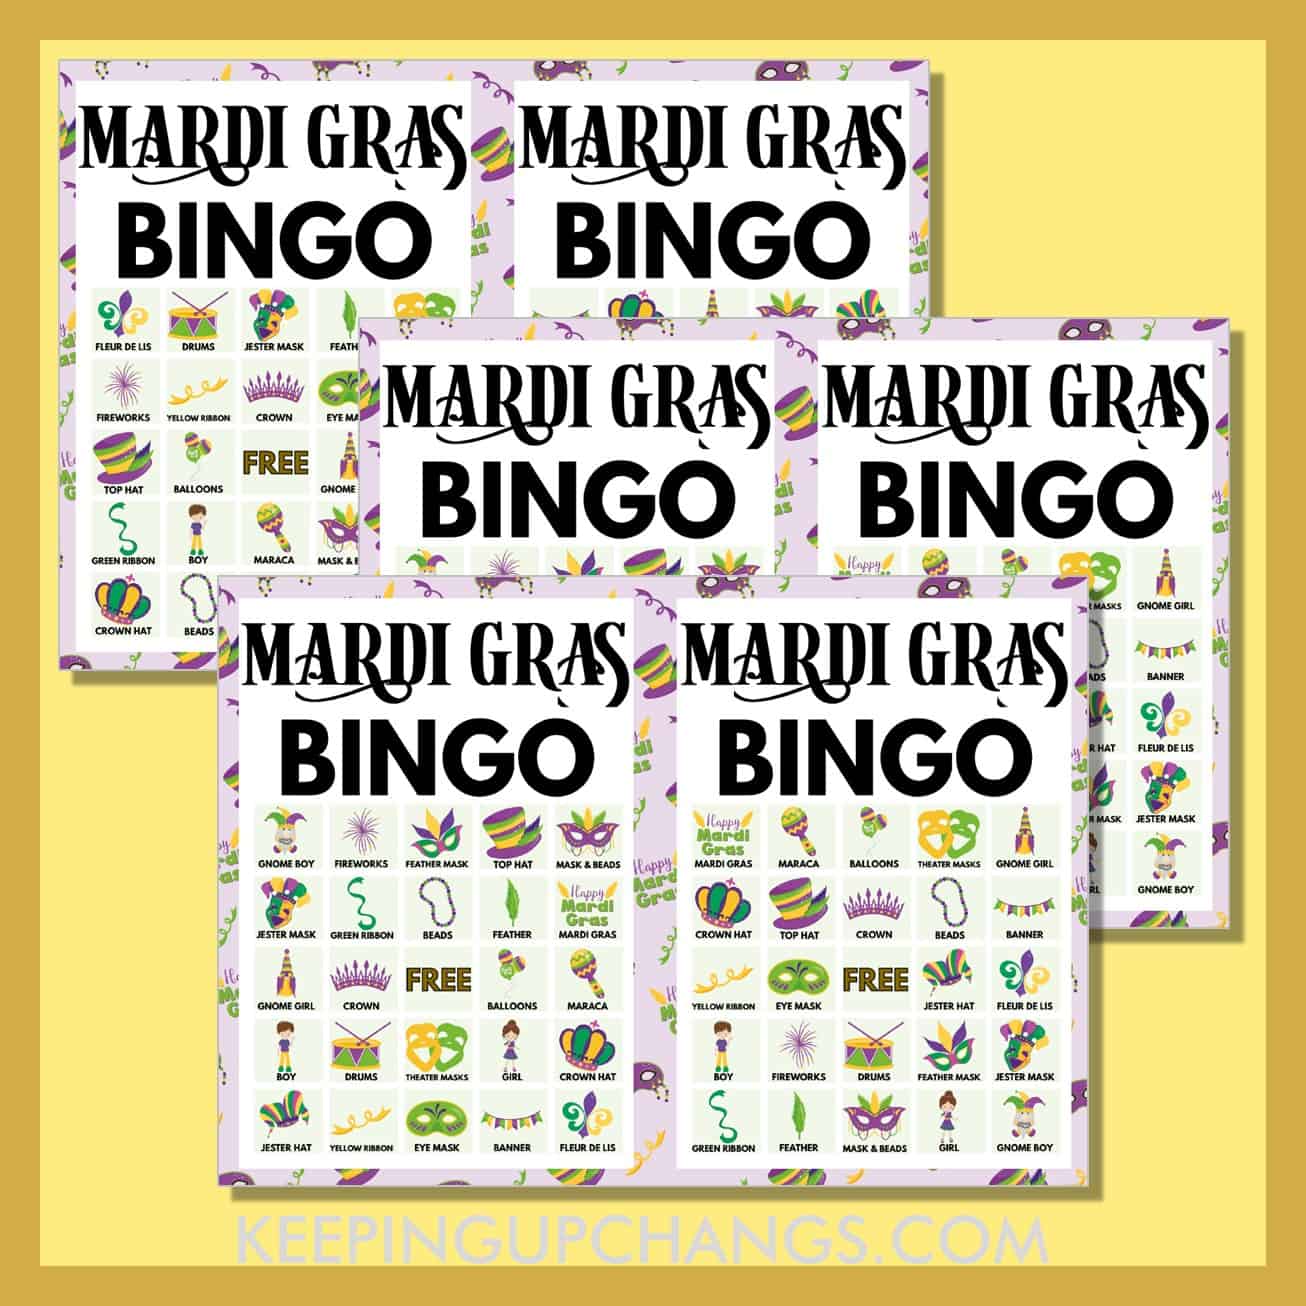 free mardi gras bingo 5x5 game cards.